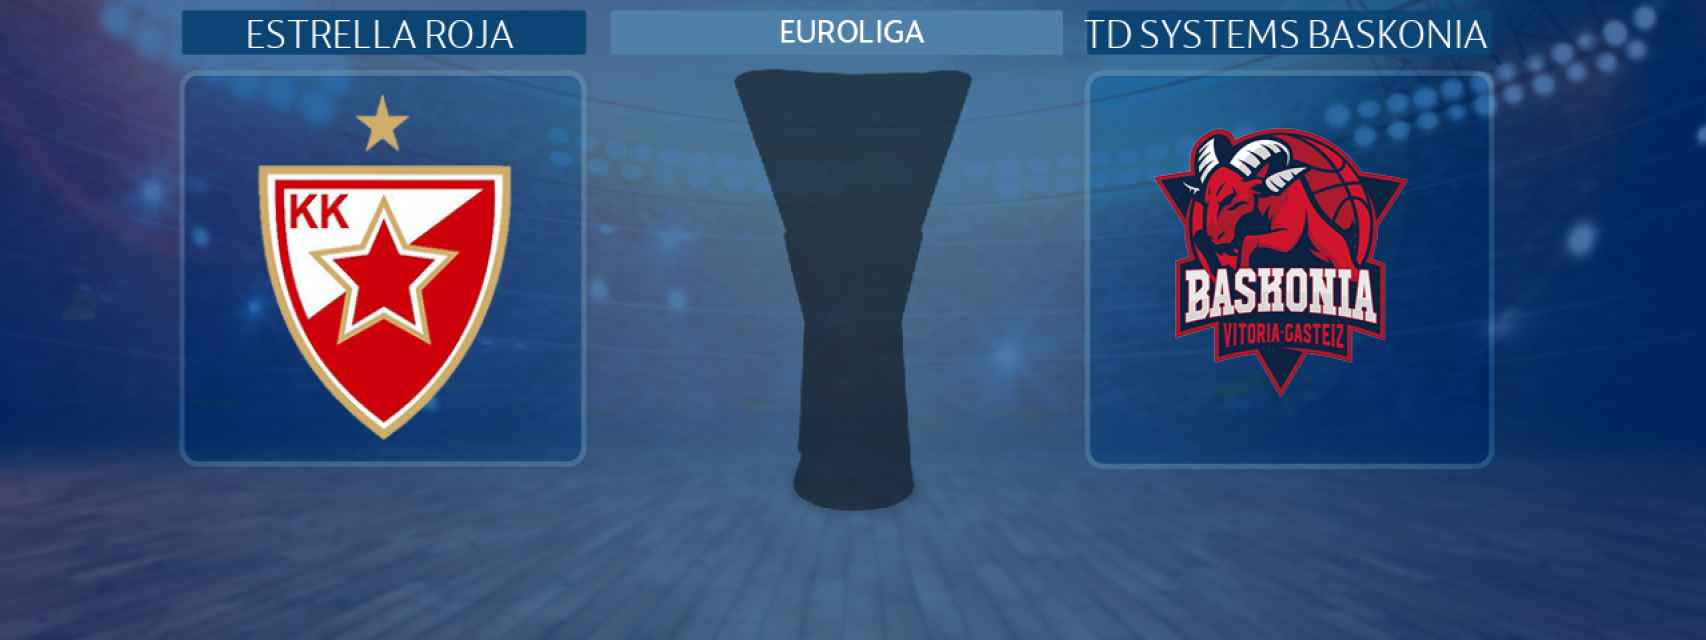 Estrella Roja - TD Systems Baskonia, partido de la Euroliga